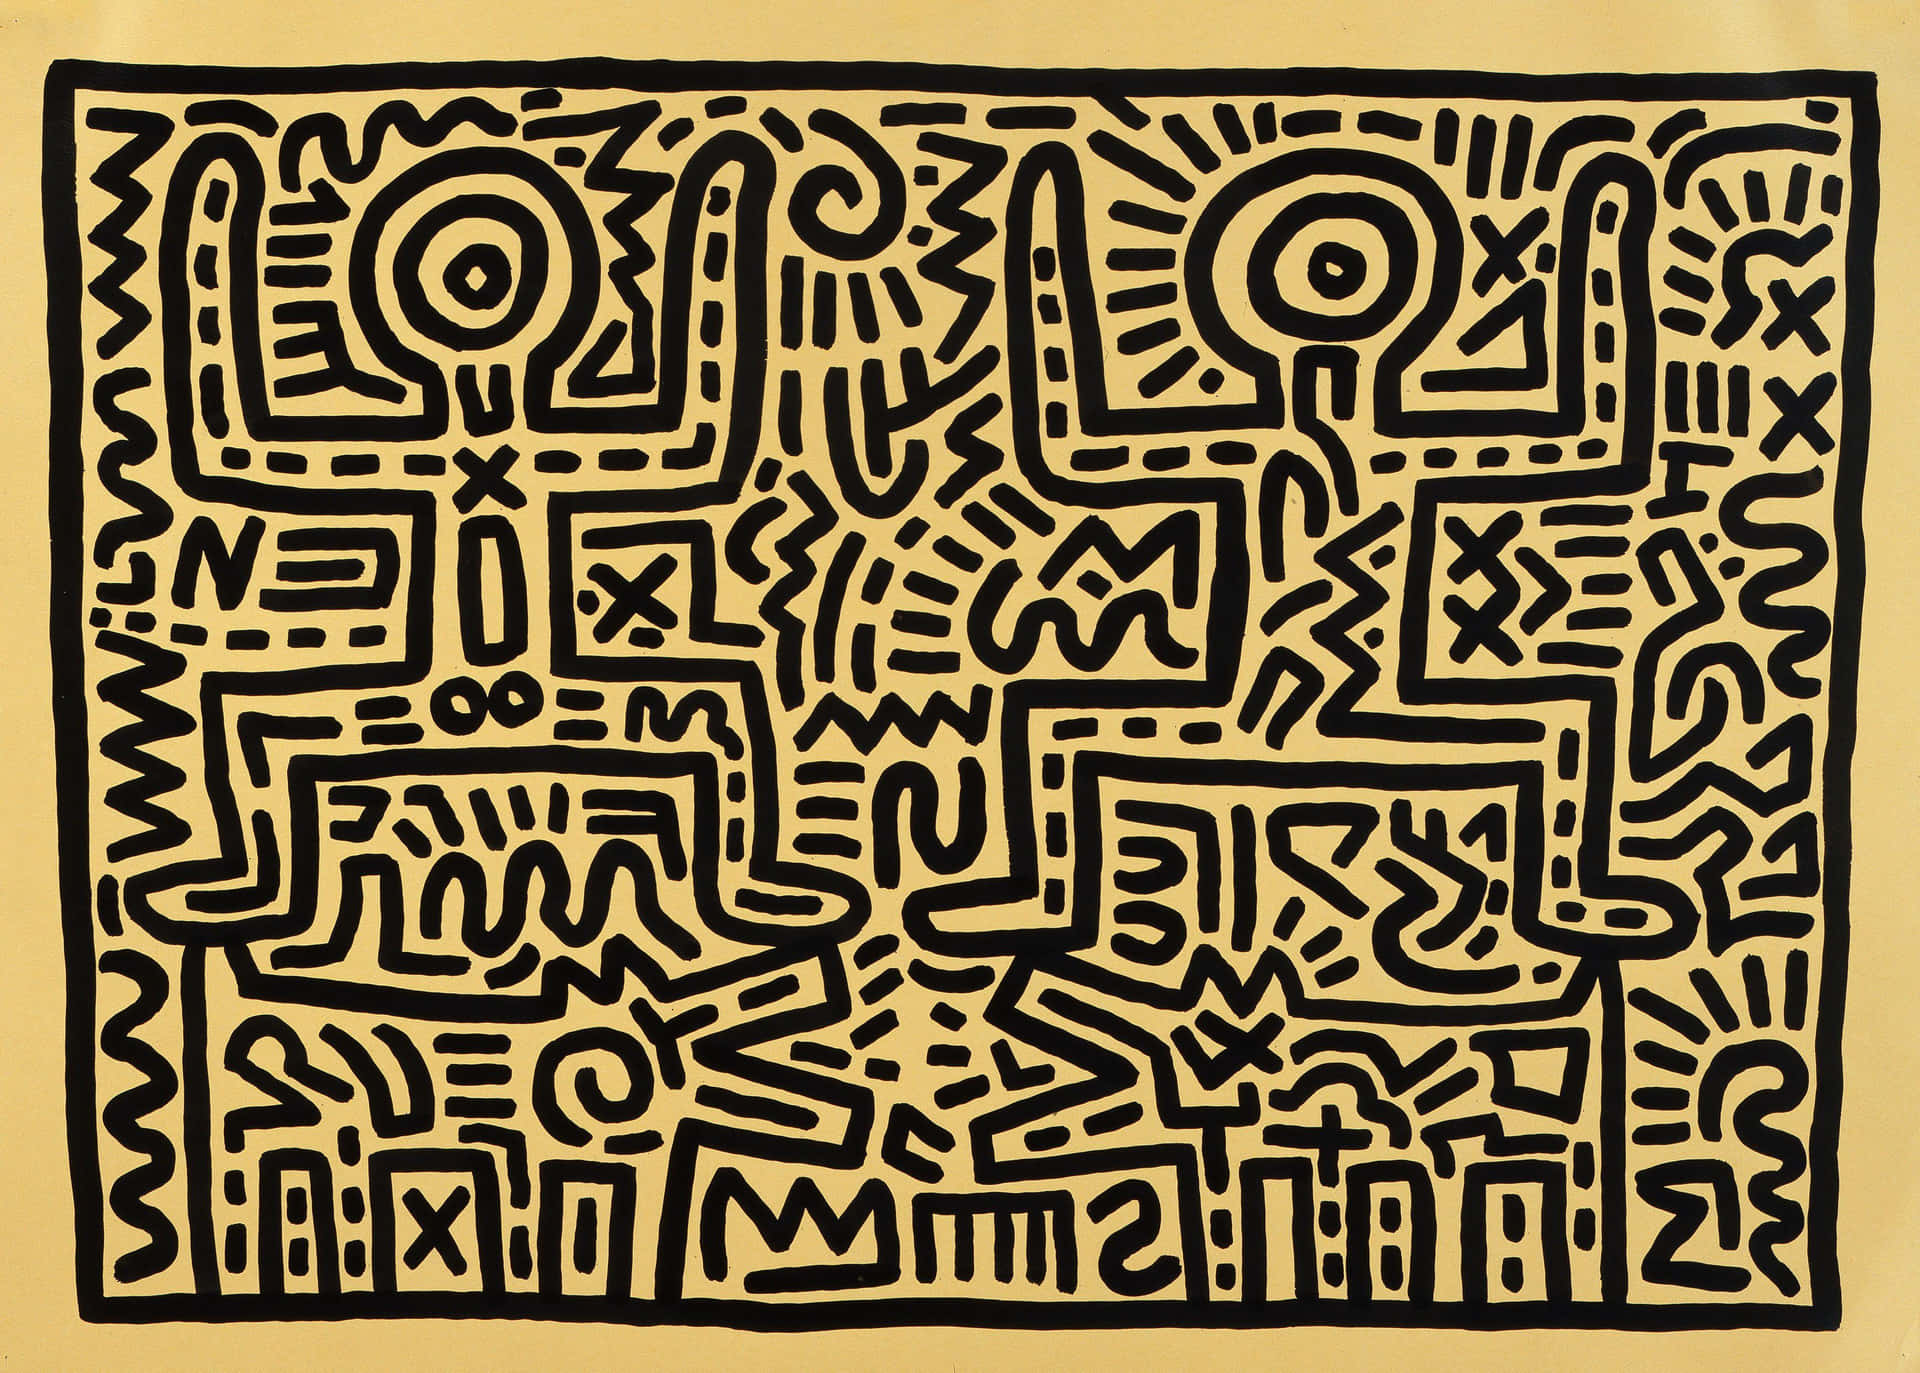 Keith Haring Inspired Abstract Artwork Wallpaper